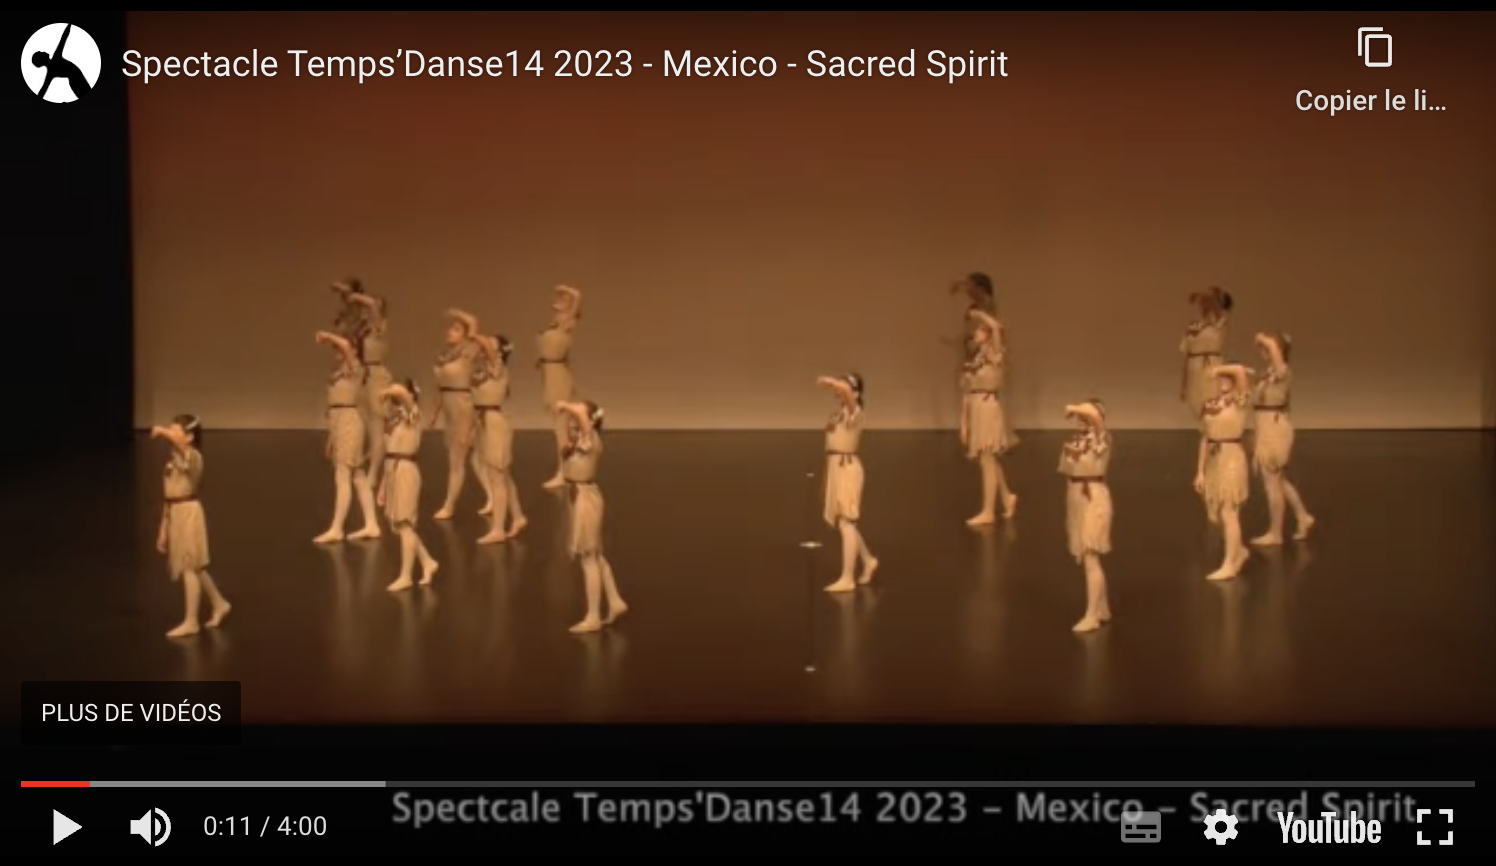 Mexico - Sacred Spirit